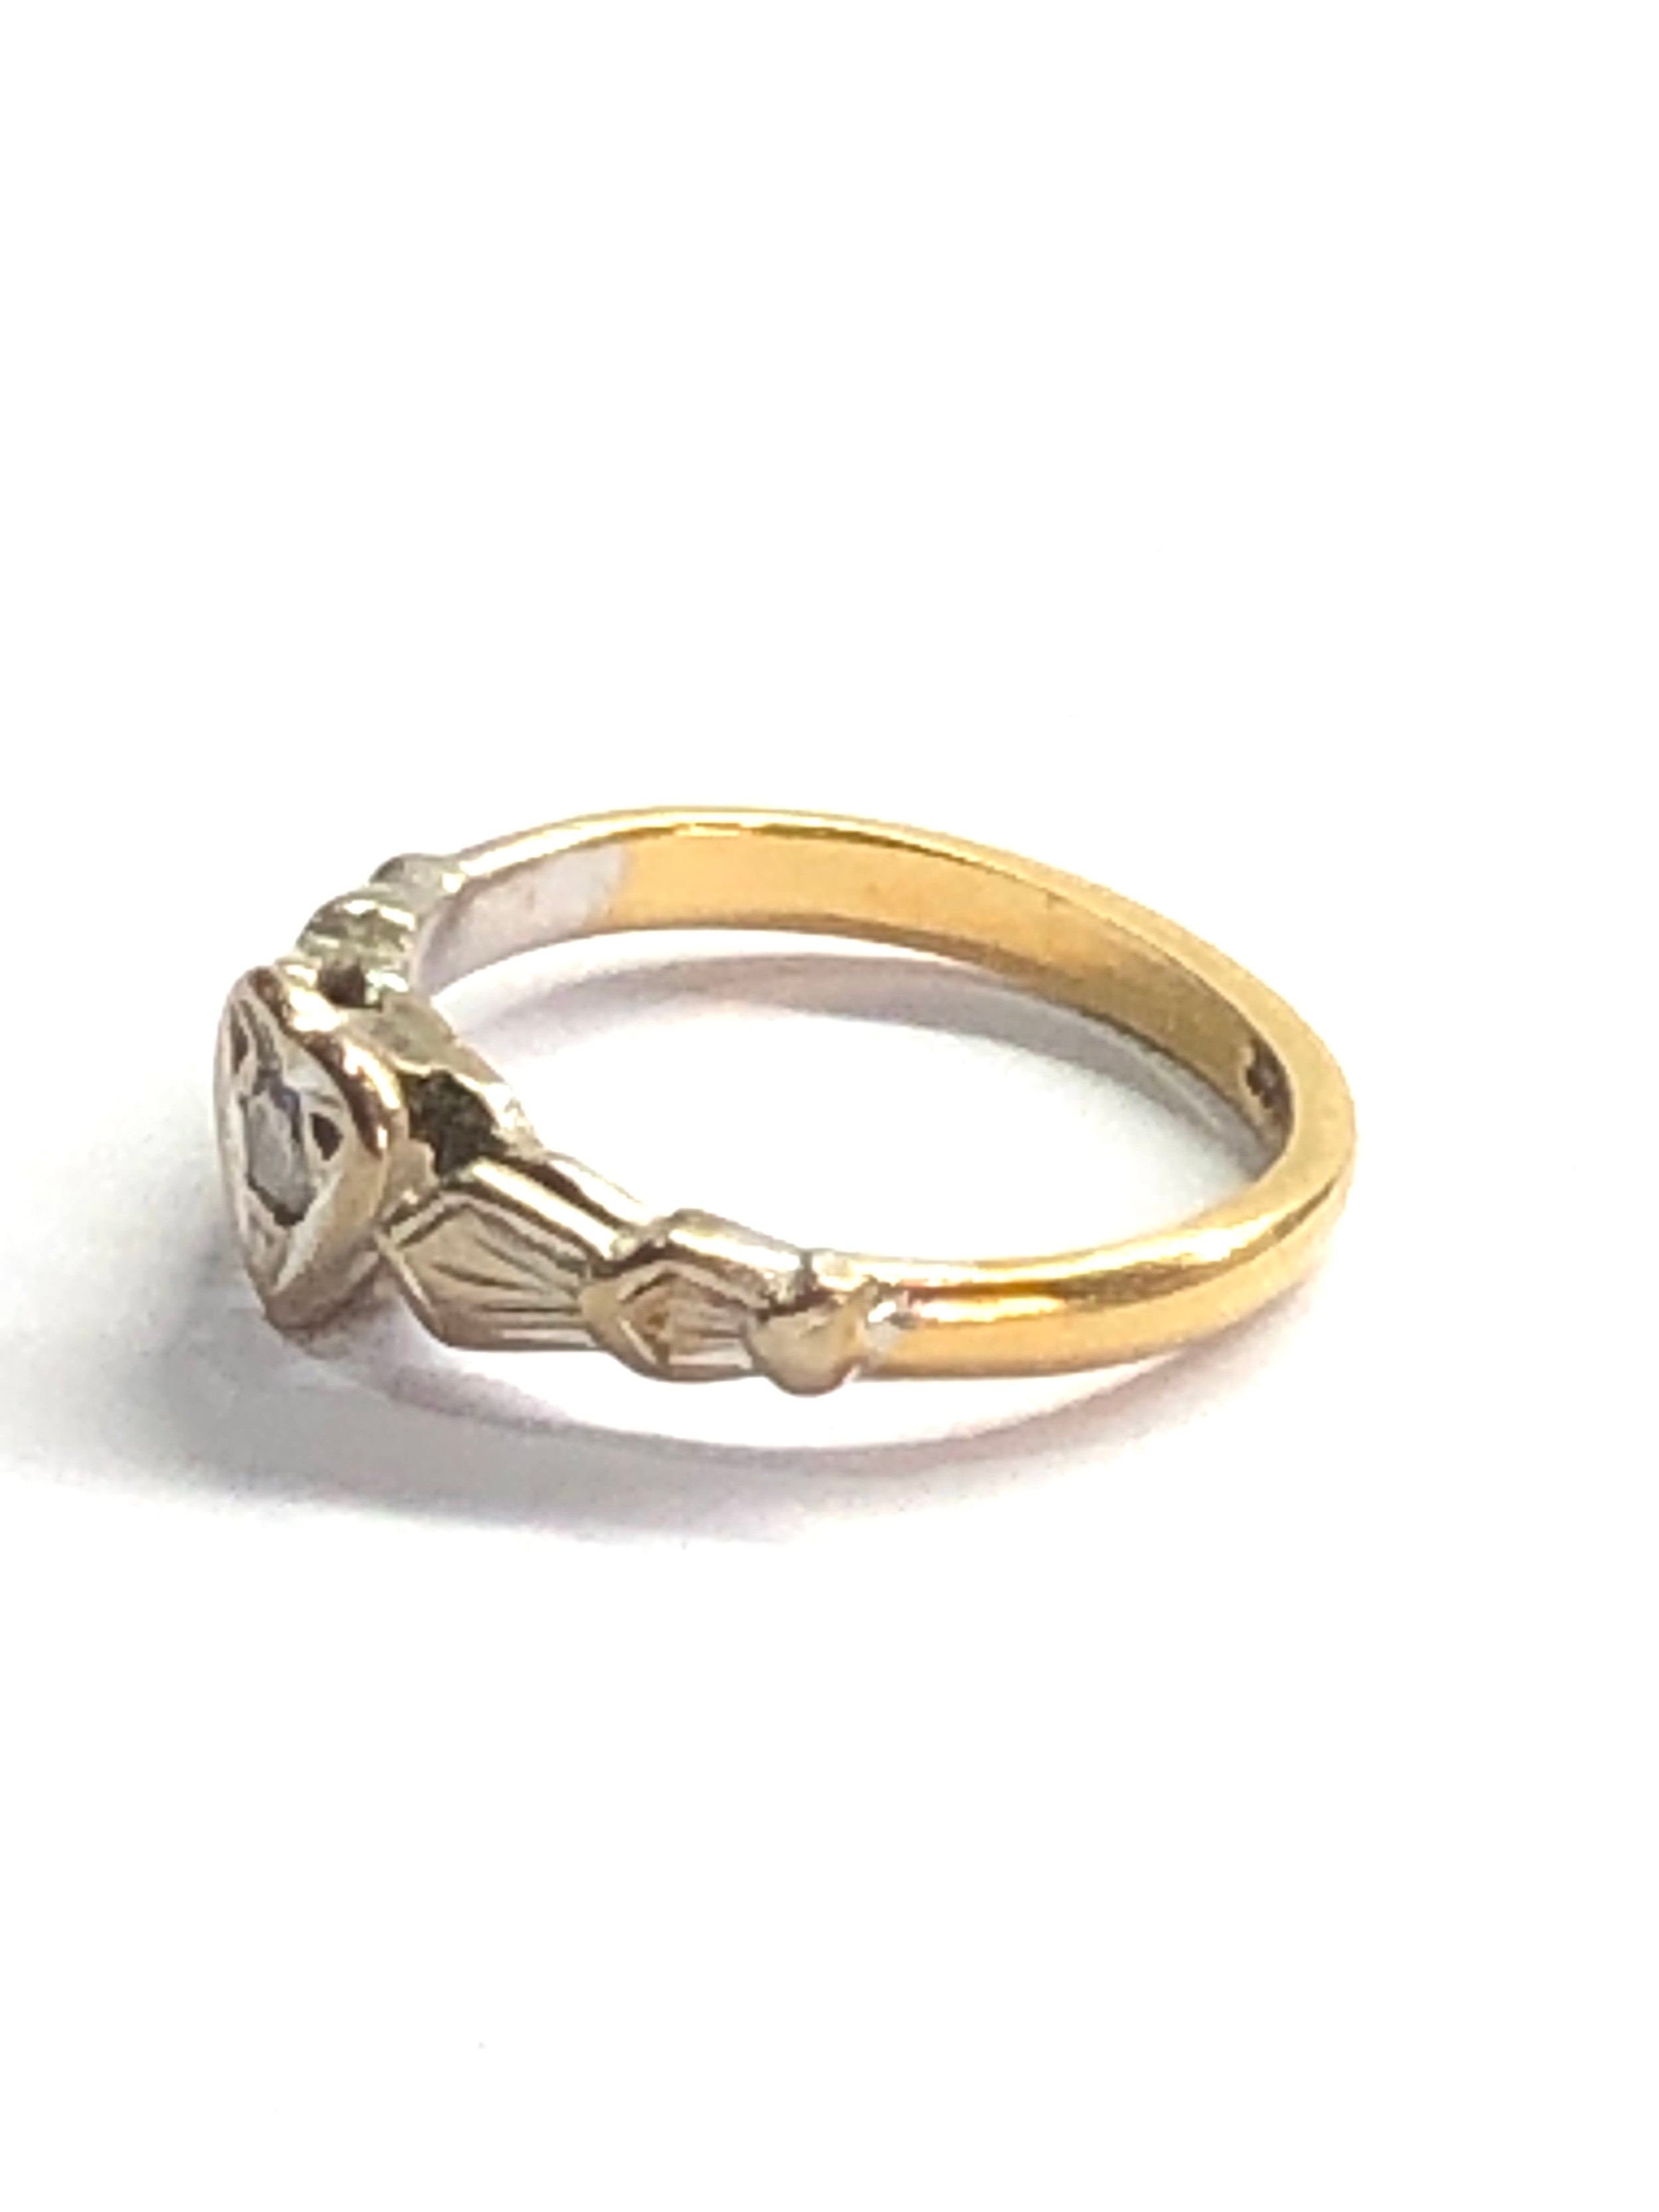 18ct gold vintage diamond ring (3g) - Image 2 of 3